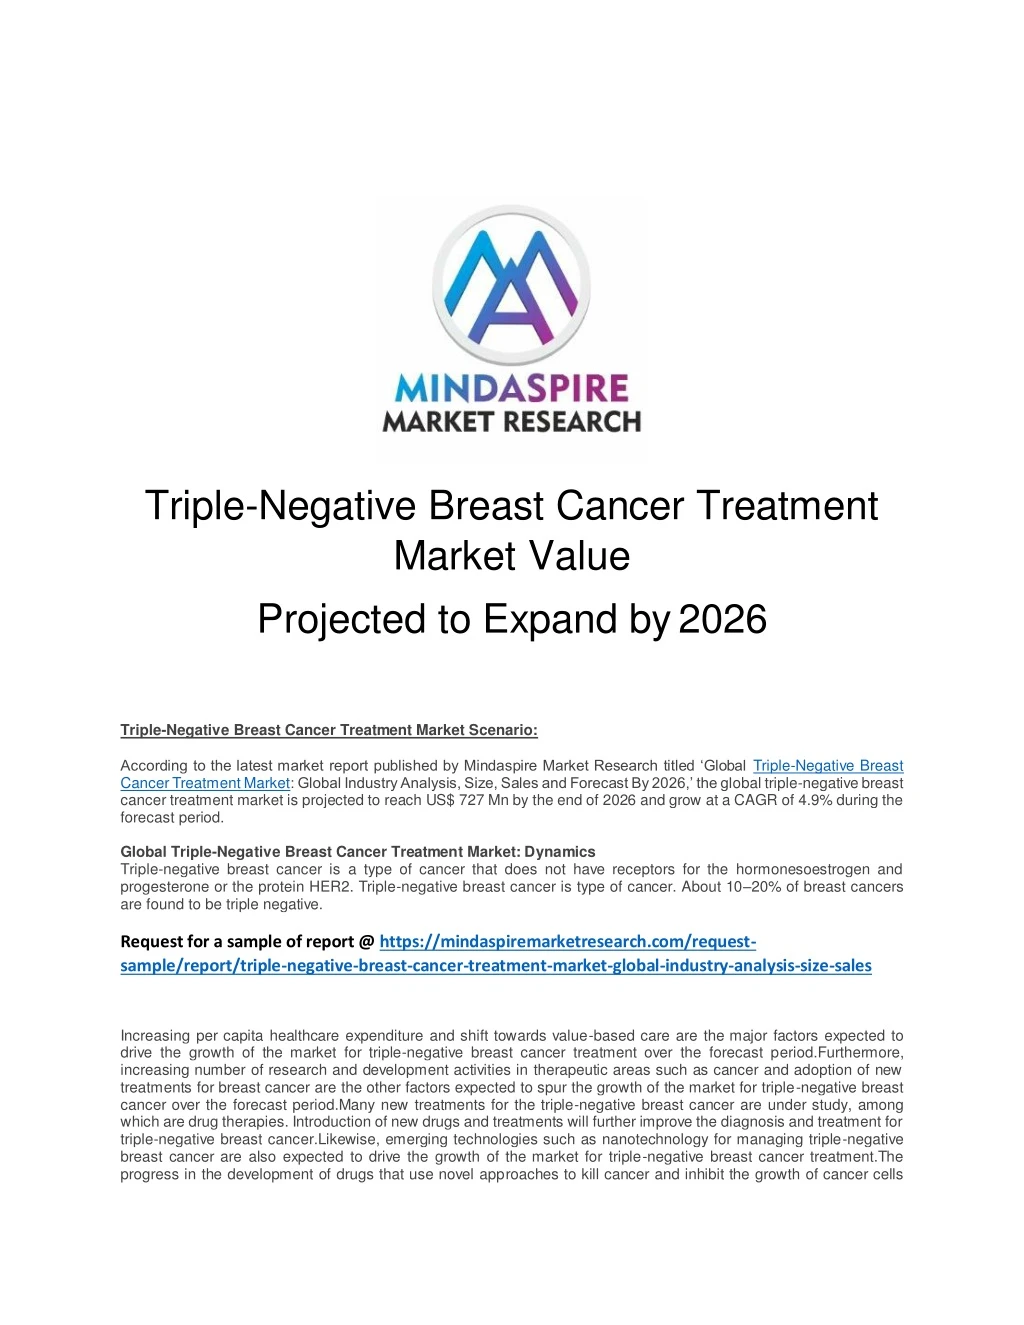 triple negative breast cancer treatment market